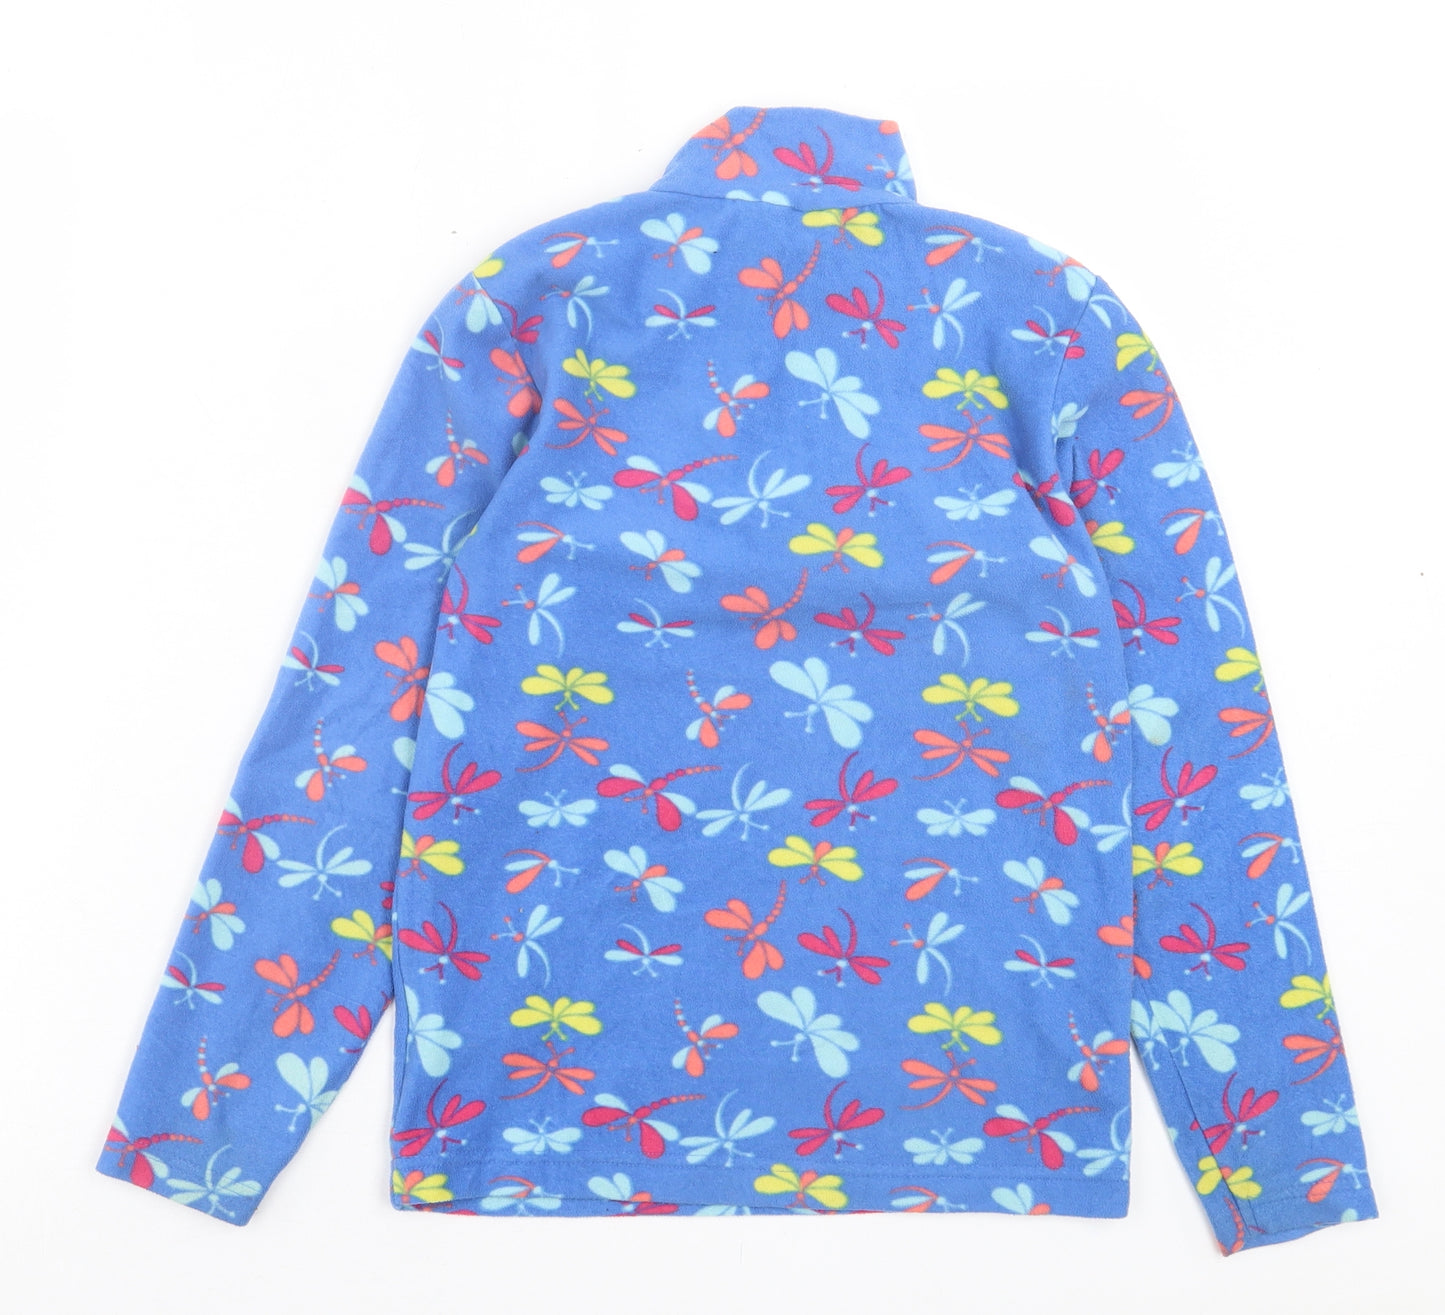 Mountain Warehouse Girls Blue Geometric Basic Jacket Jacket Size 9-10 Years Zip - Butterfly Print